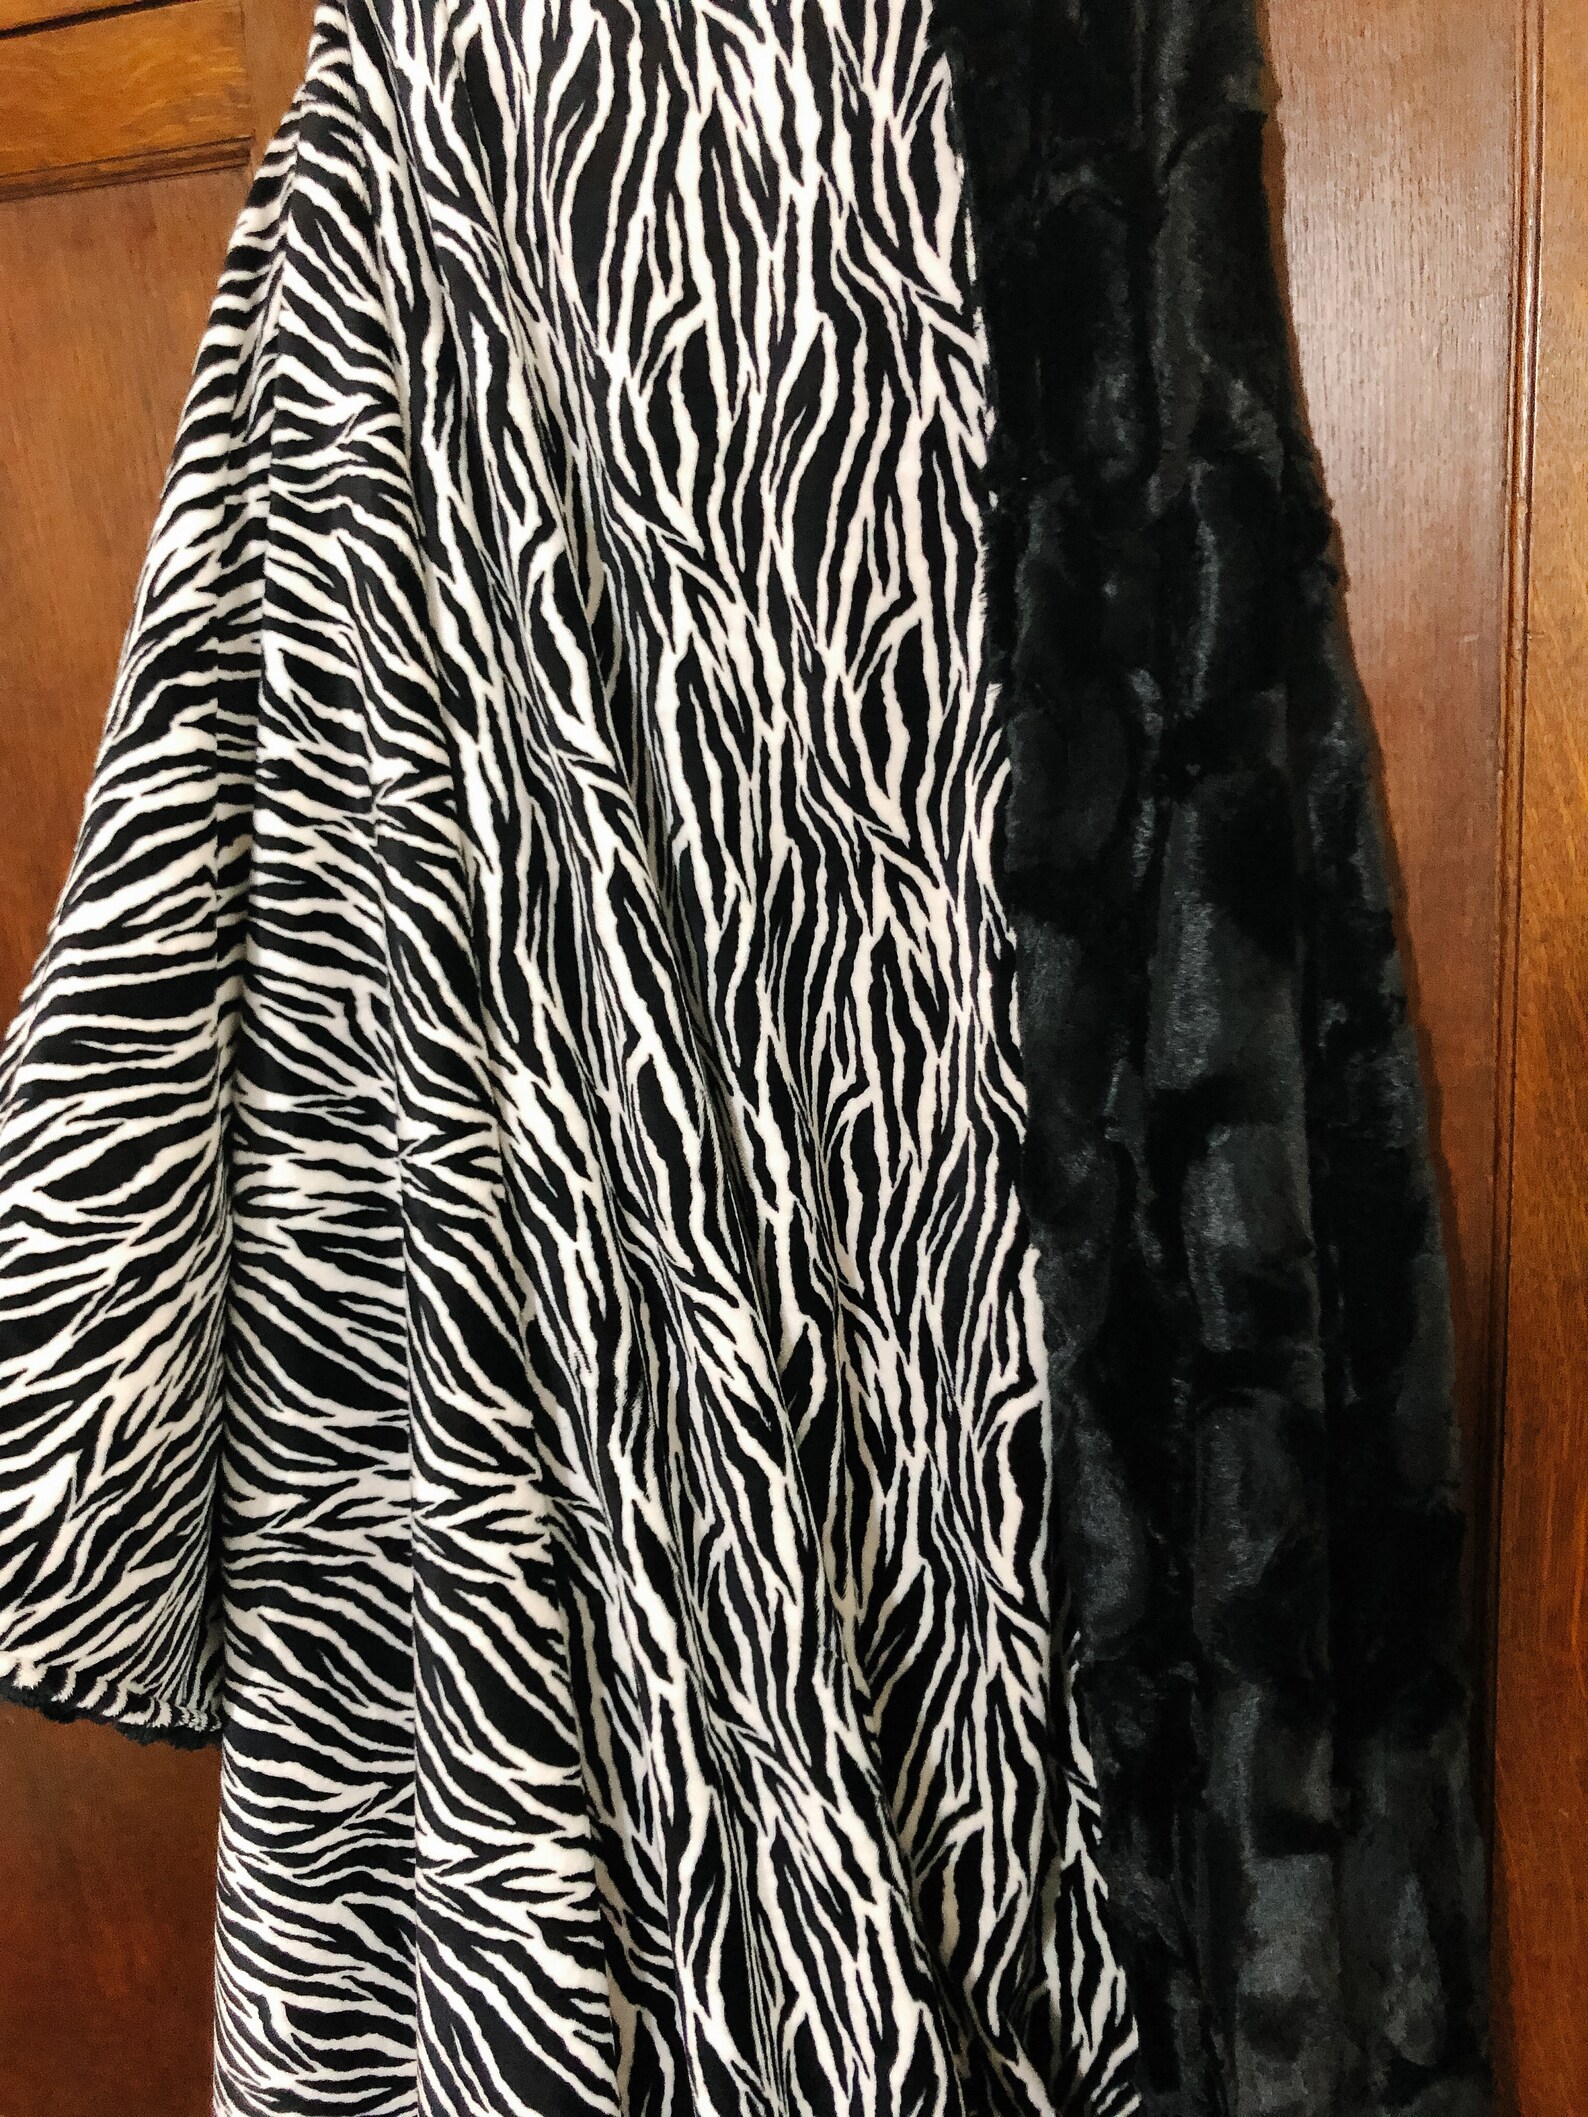 Zebra Print Minky Blanket Faux Fur Zebra Print Minky Cuddle | Etsy